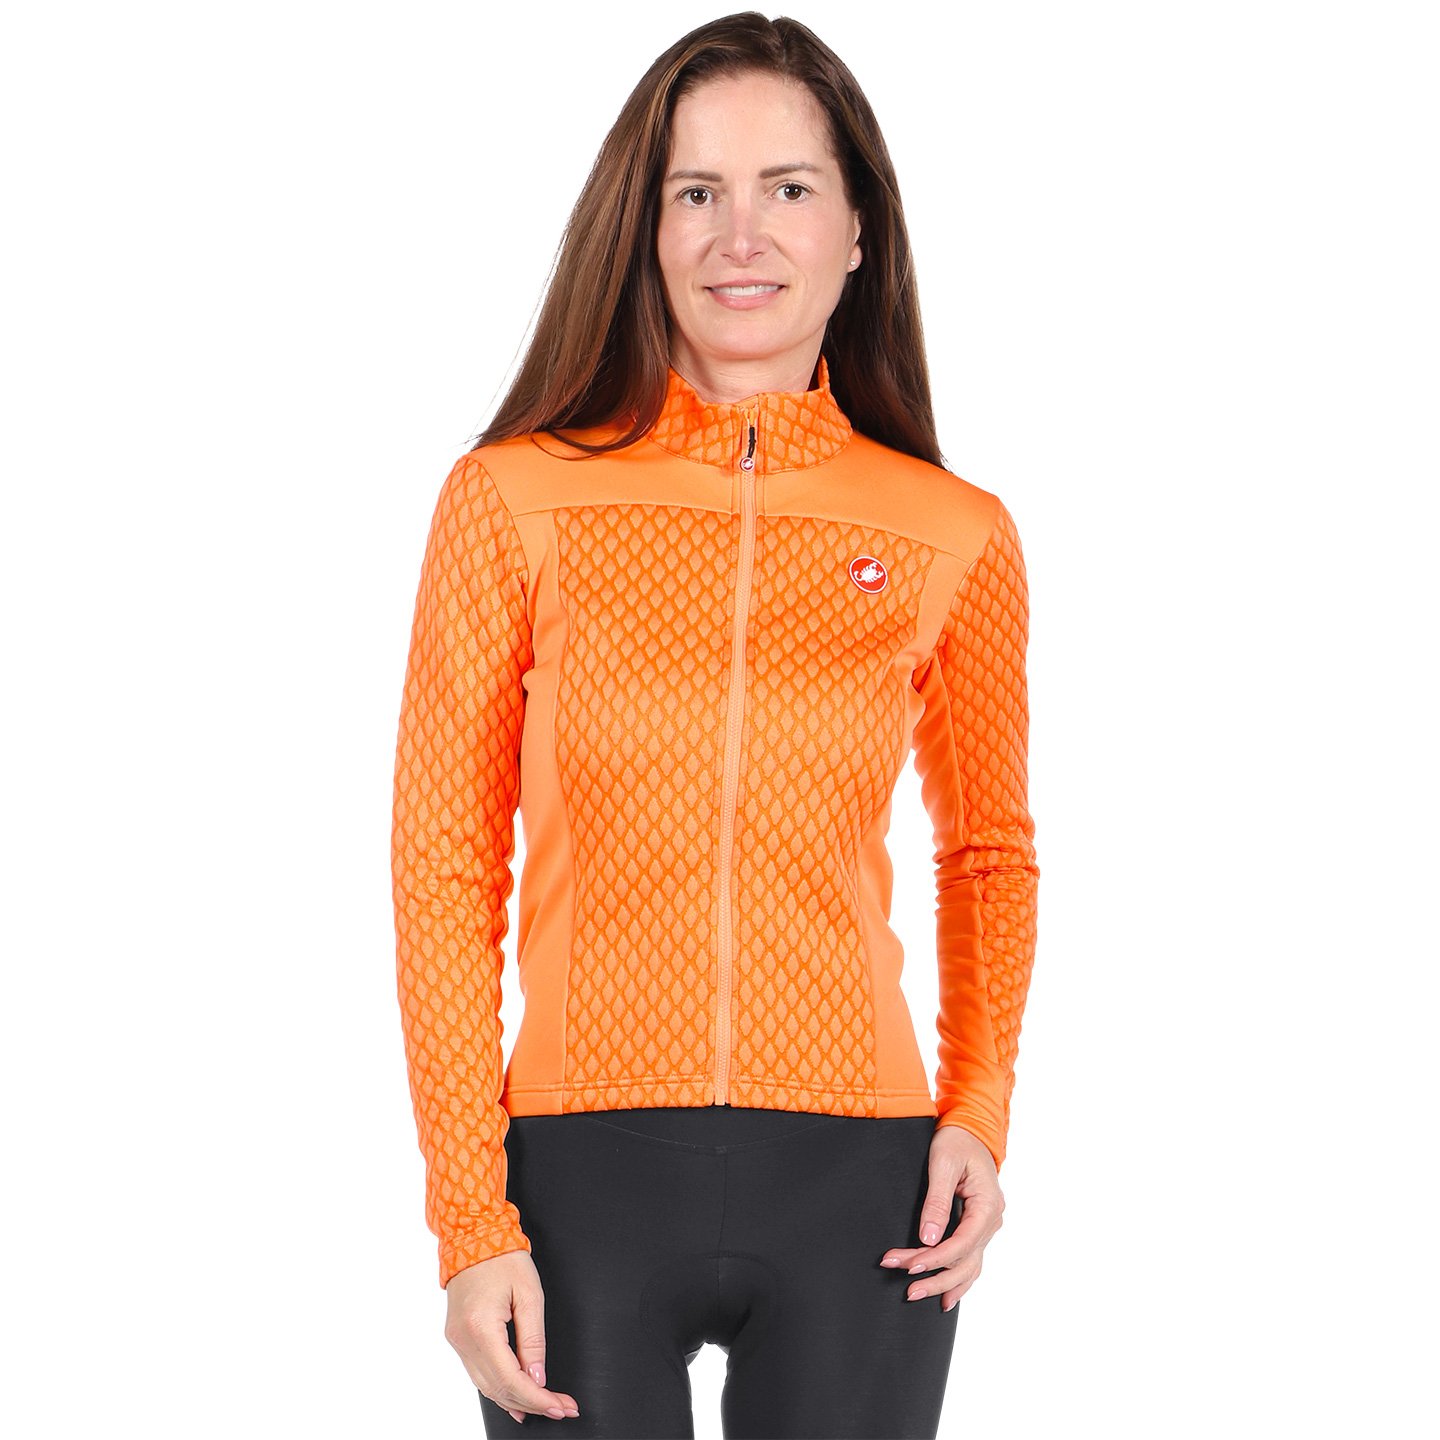 CASTELLI Sfida 2 Women’s Jersey Jacket Jersey / Jacket, size L, Cycling jersey, Cycling clothing